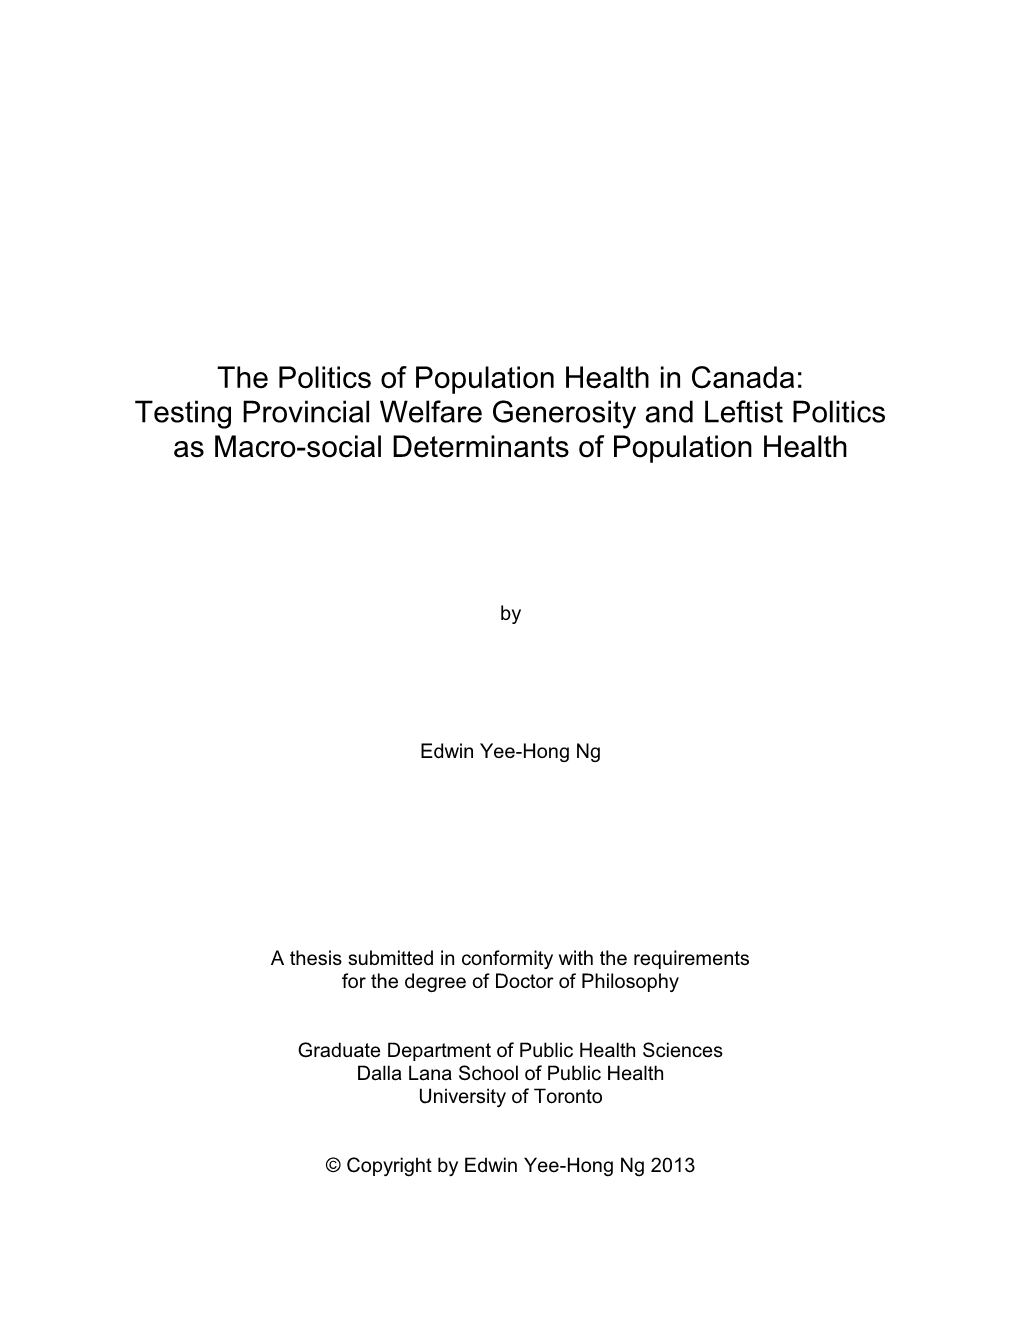 Testing Provincial Welfare Generosity and Leftist Politics As Macro-Social Determinants of Population Health